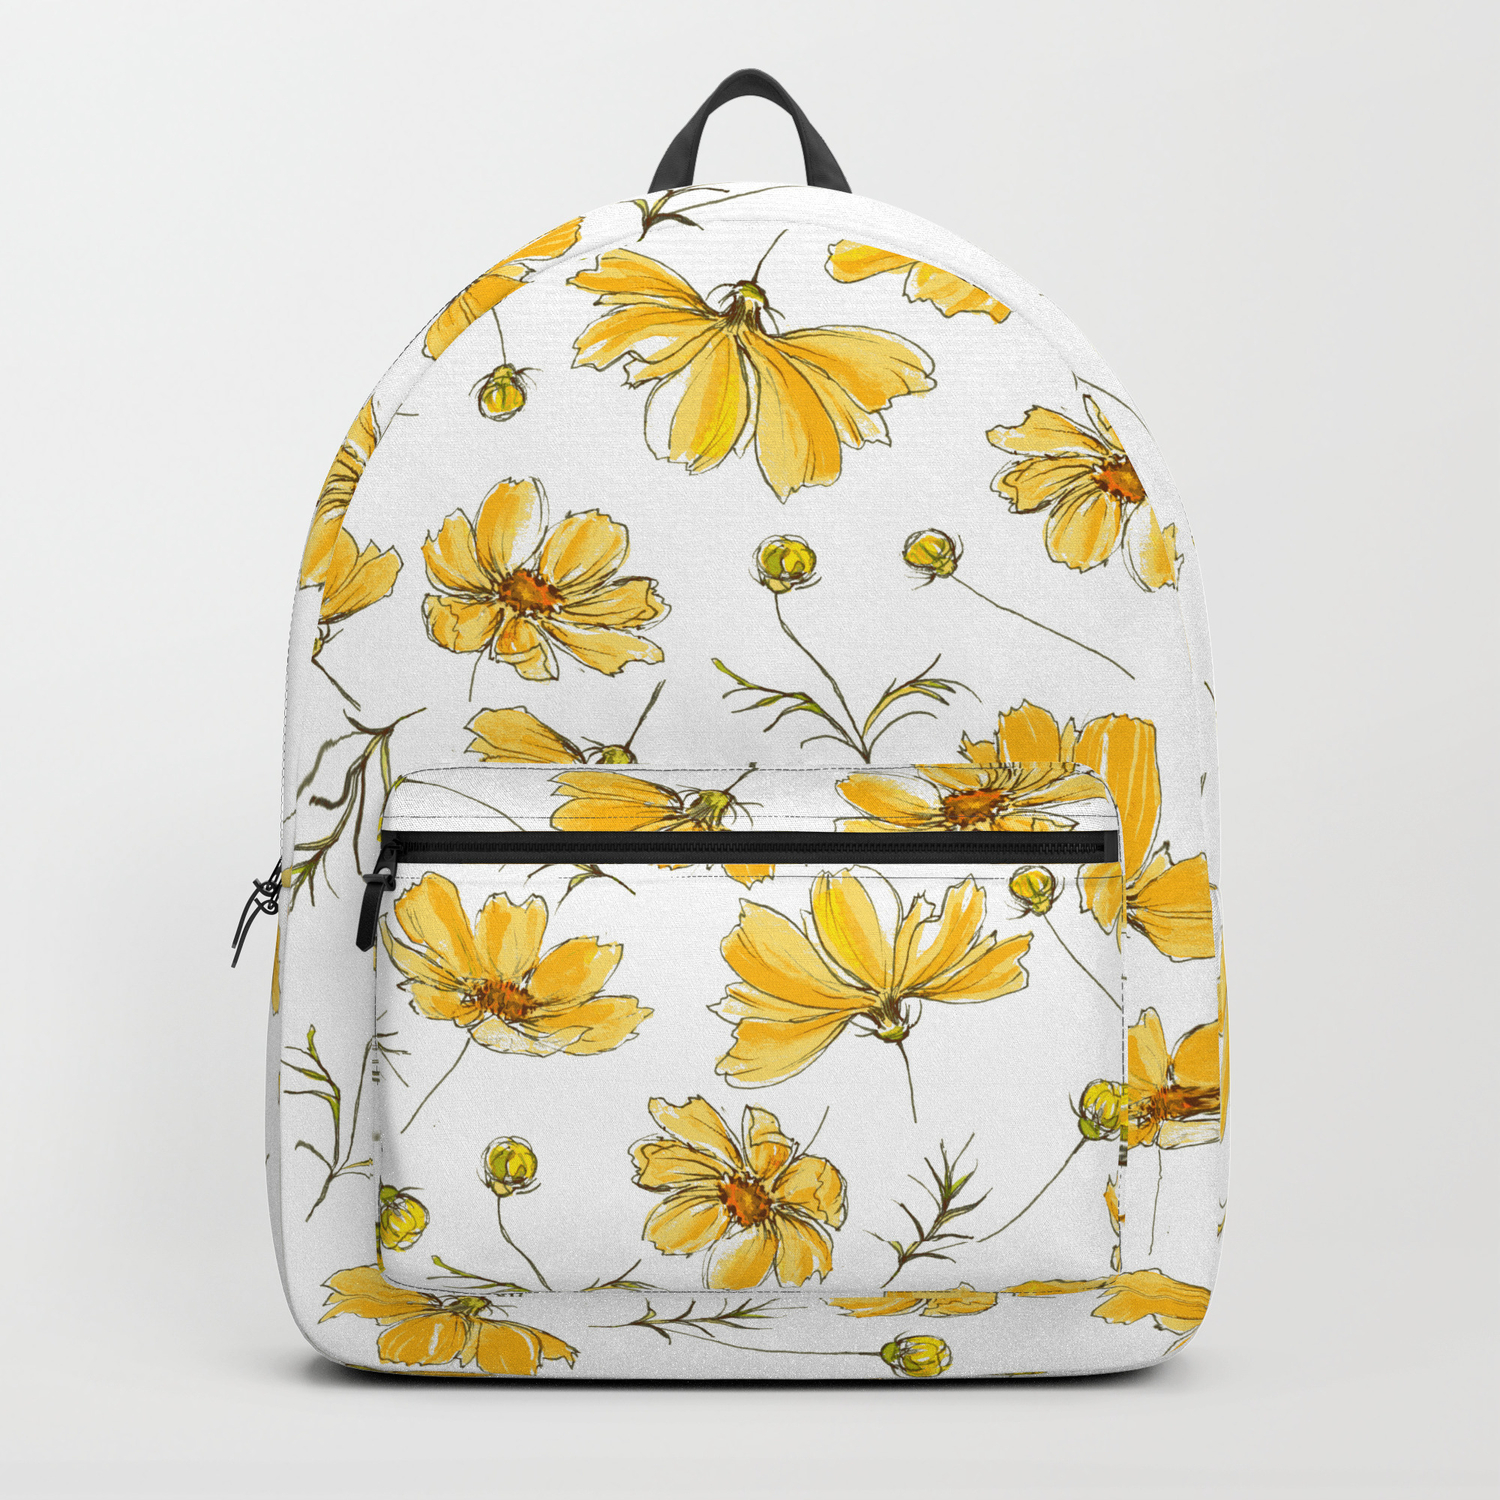 Flowers Colors Bloom Nature Colorful Petals Unique Custom Outdoor Shoulders Bag Fabric Backpack Multipurpose Daypacks For Adult